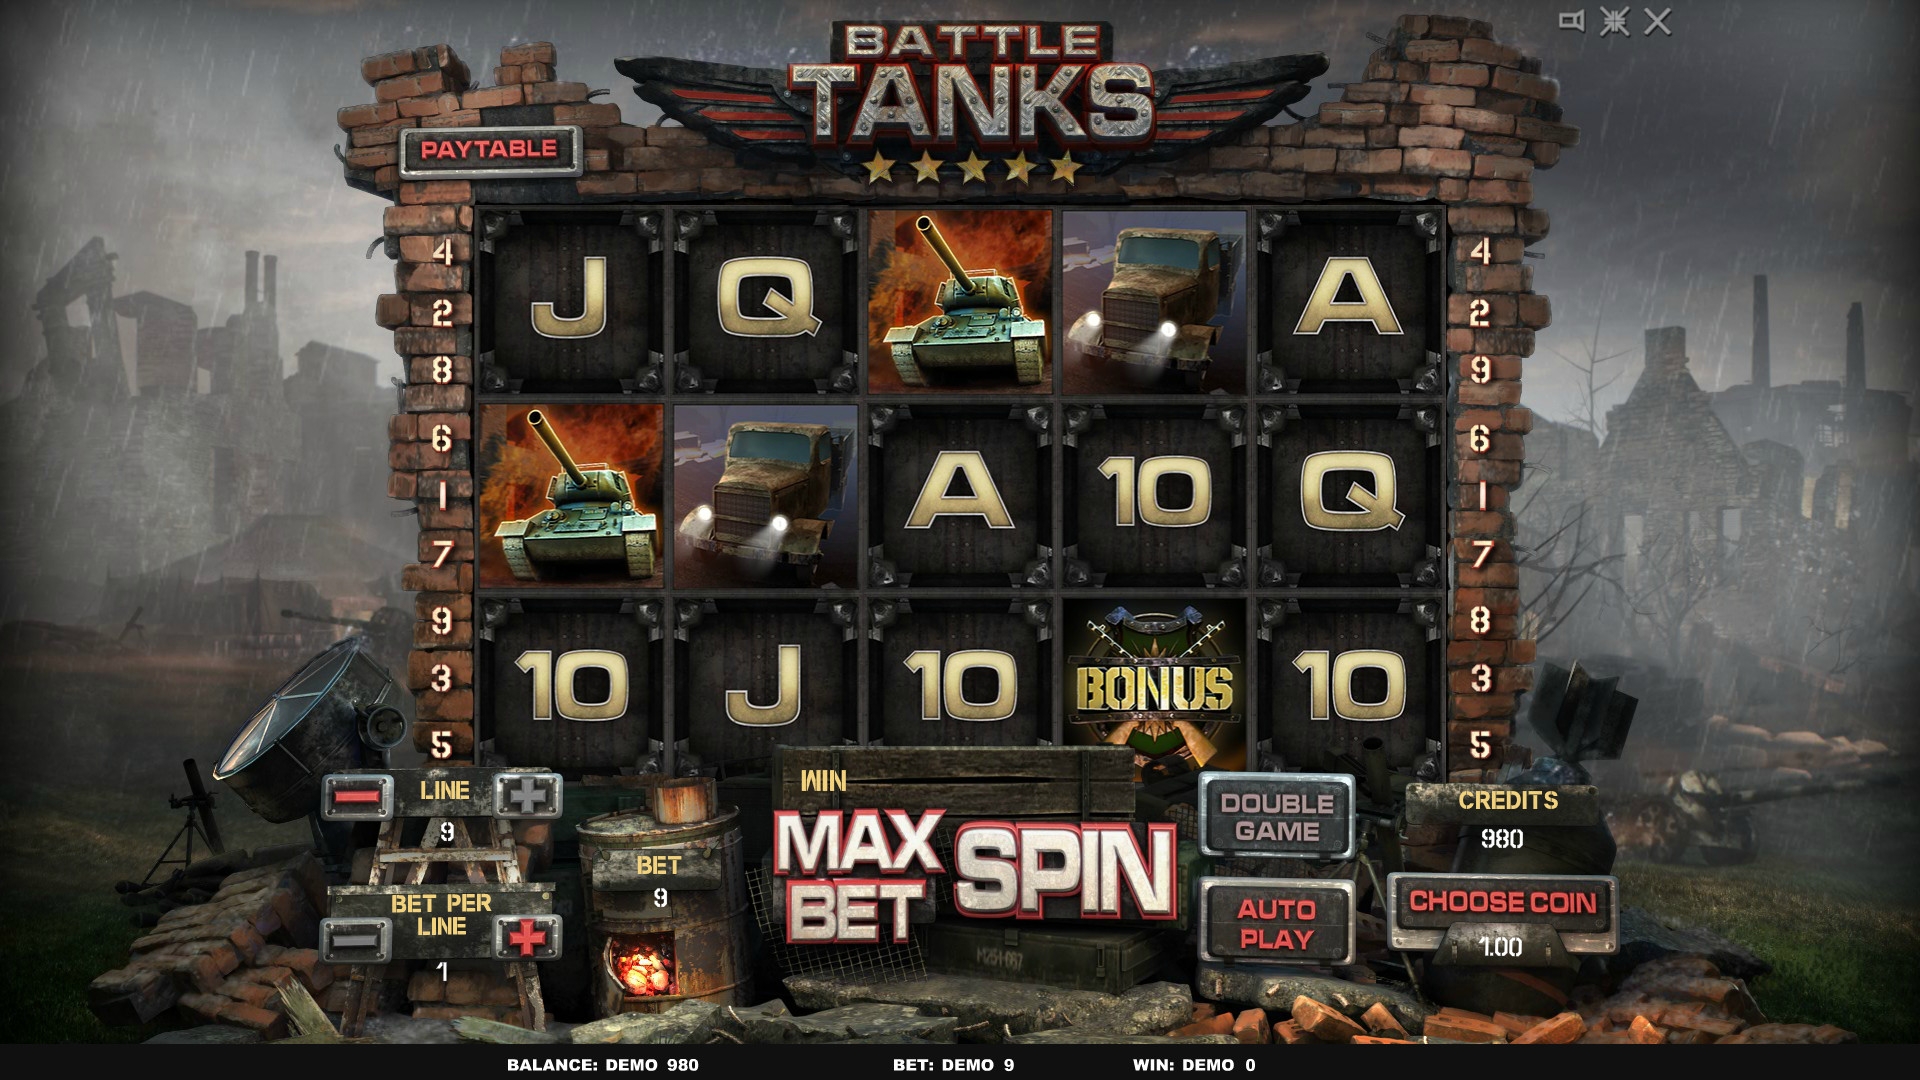 Battle Tanks (Battle Tanks) from category Slots